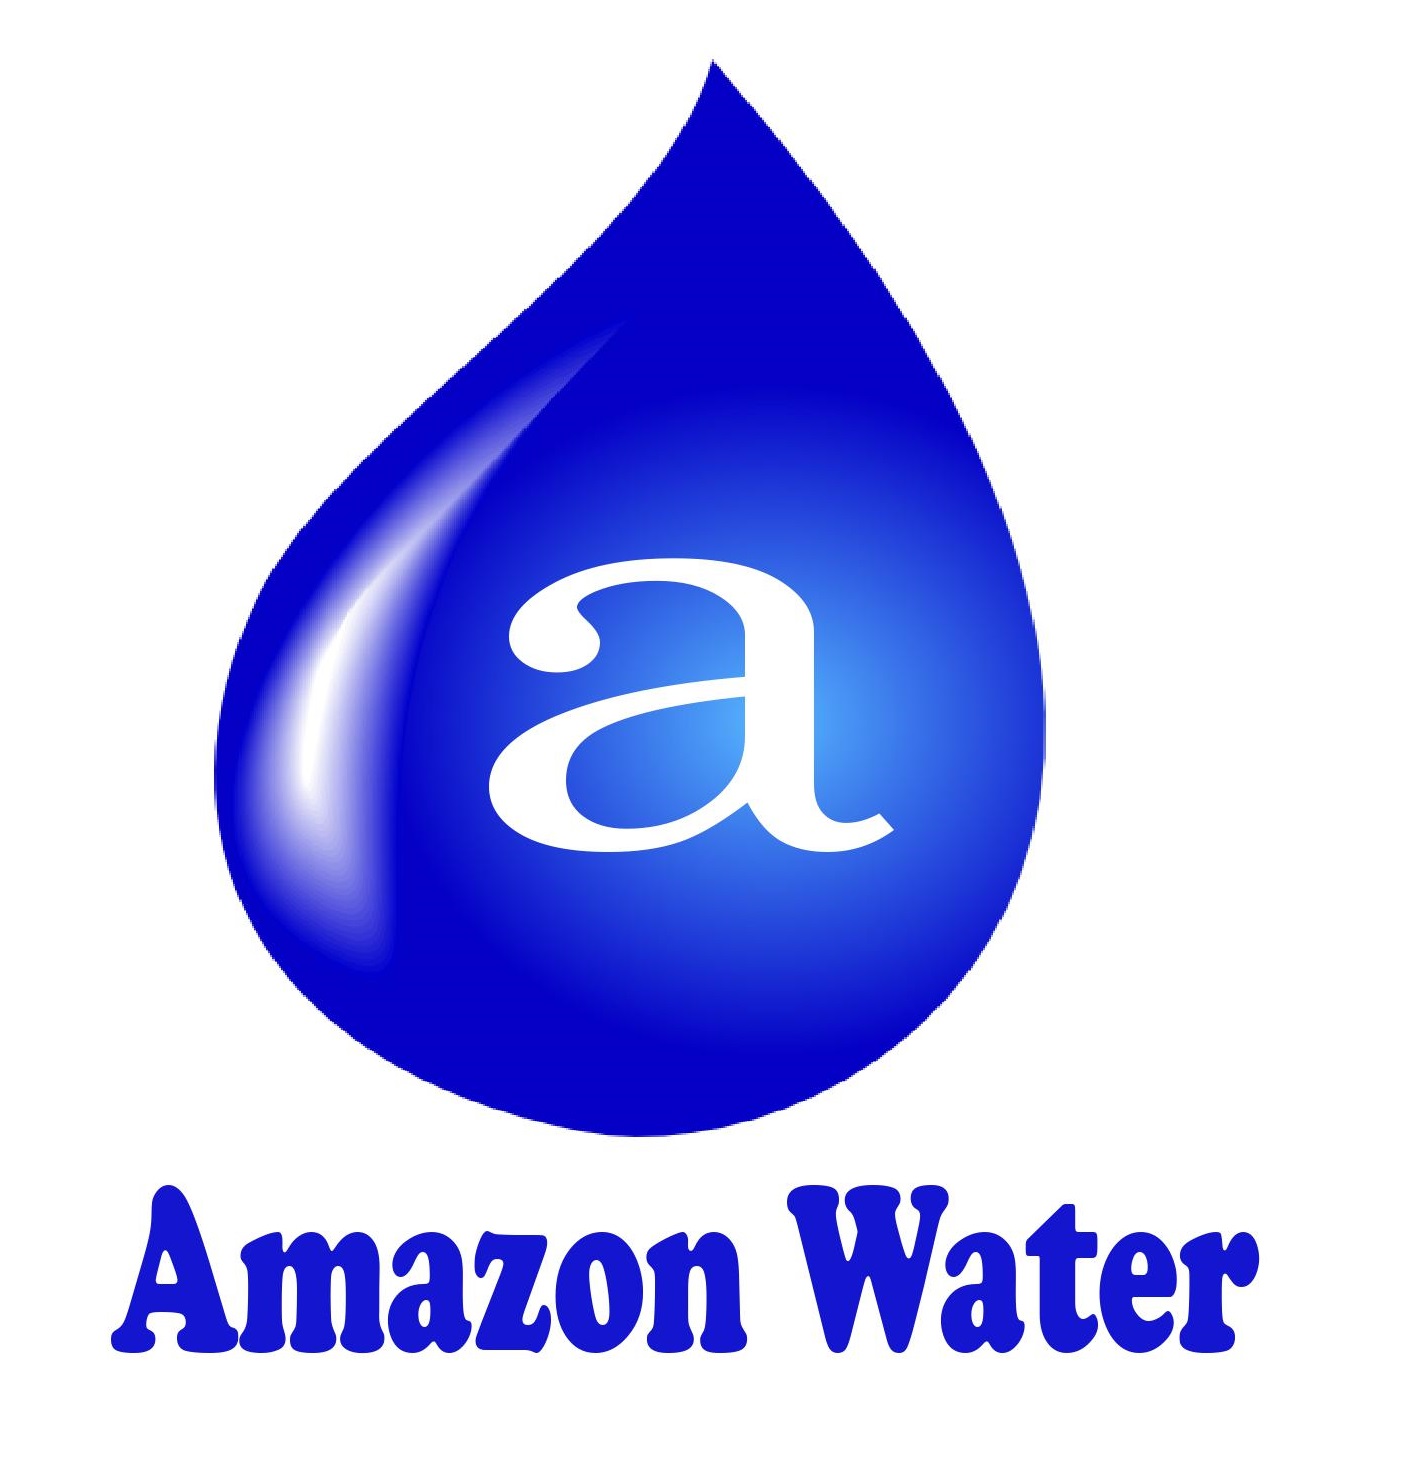 Amazon Water Engineering Co., Ltd